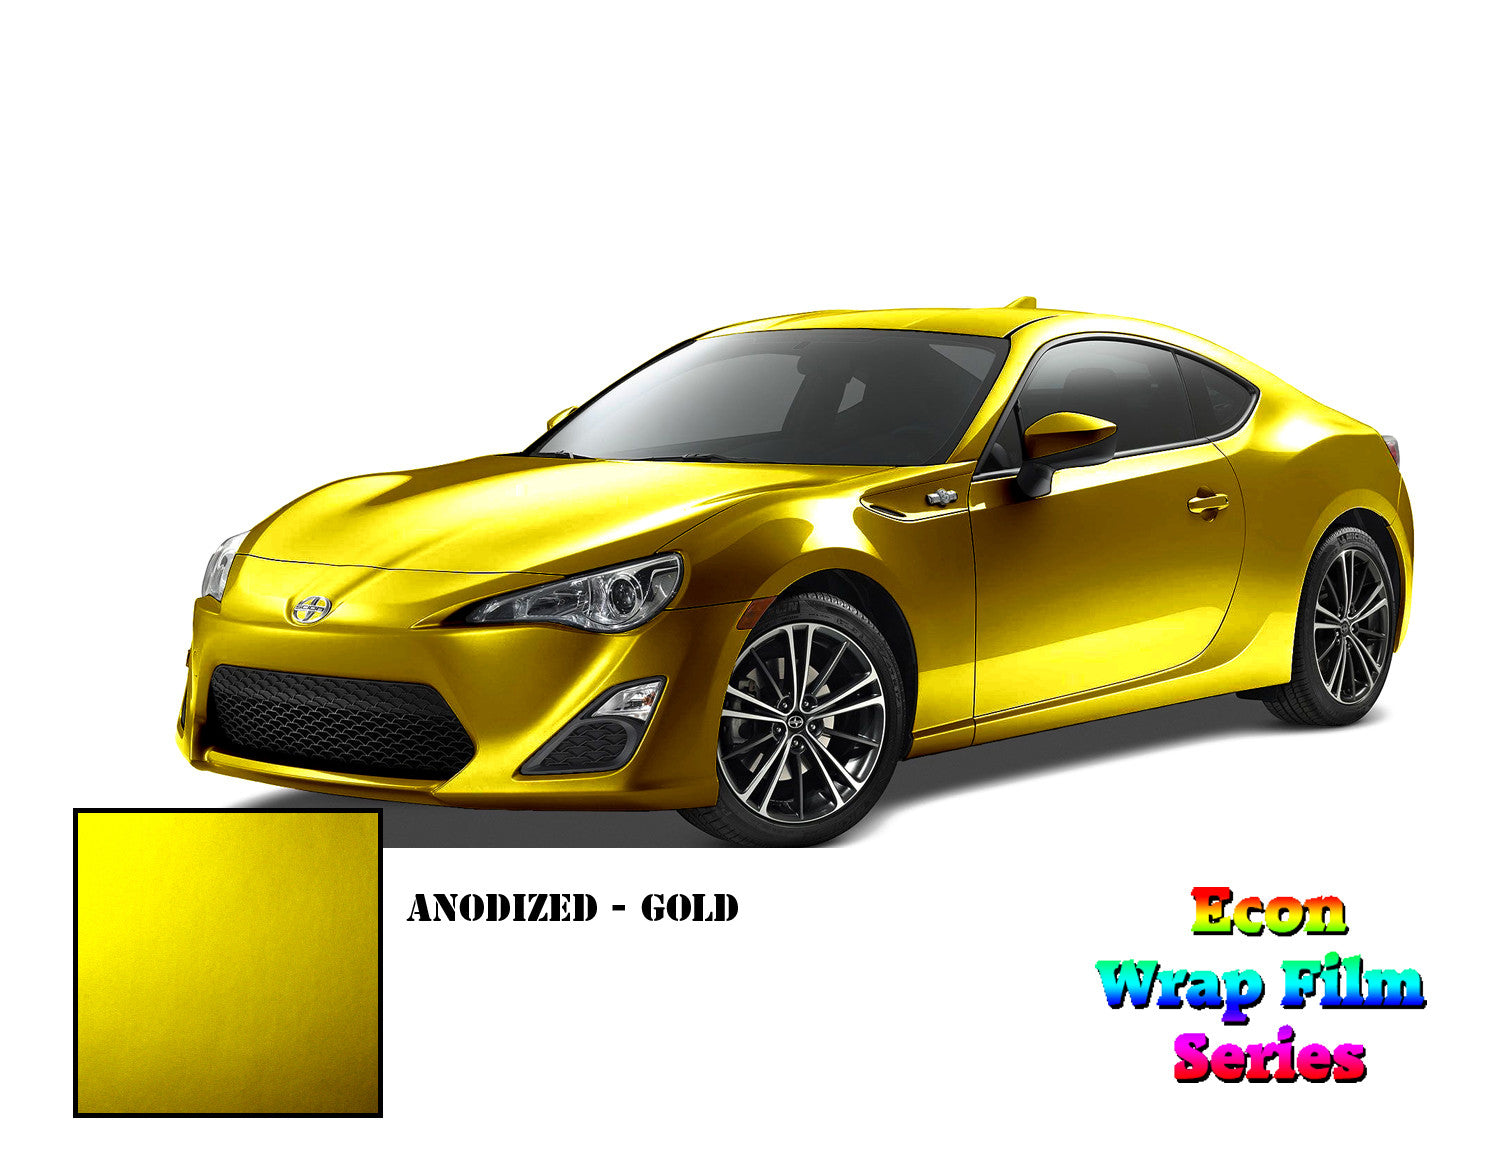 Econ Wrap Film Series - Anodized Gold - Hachi Auto